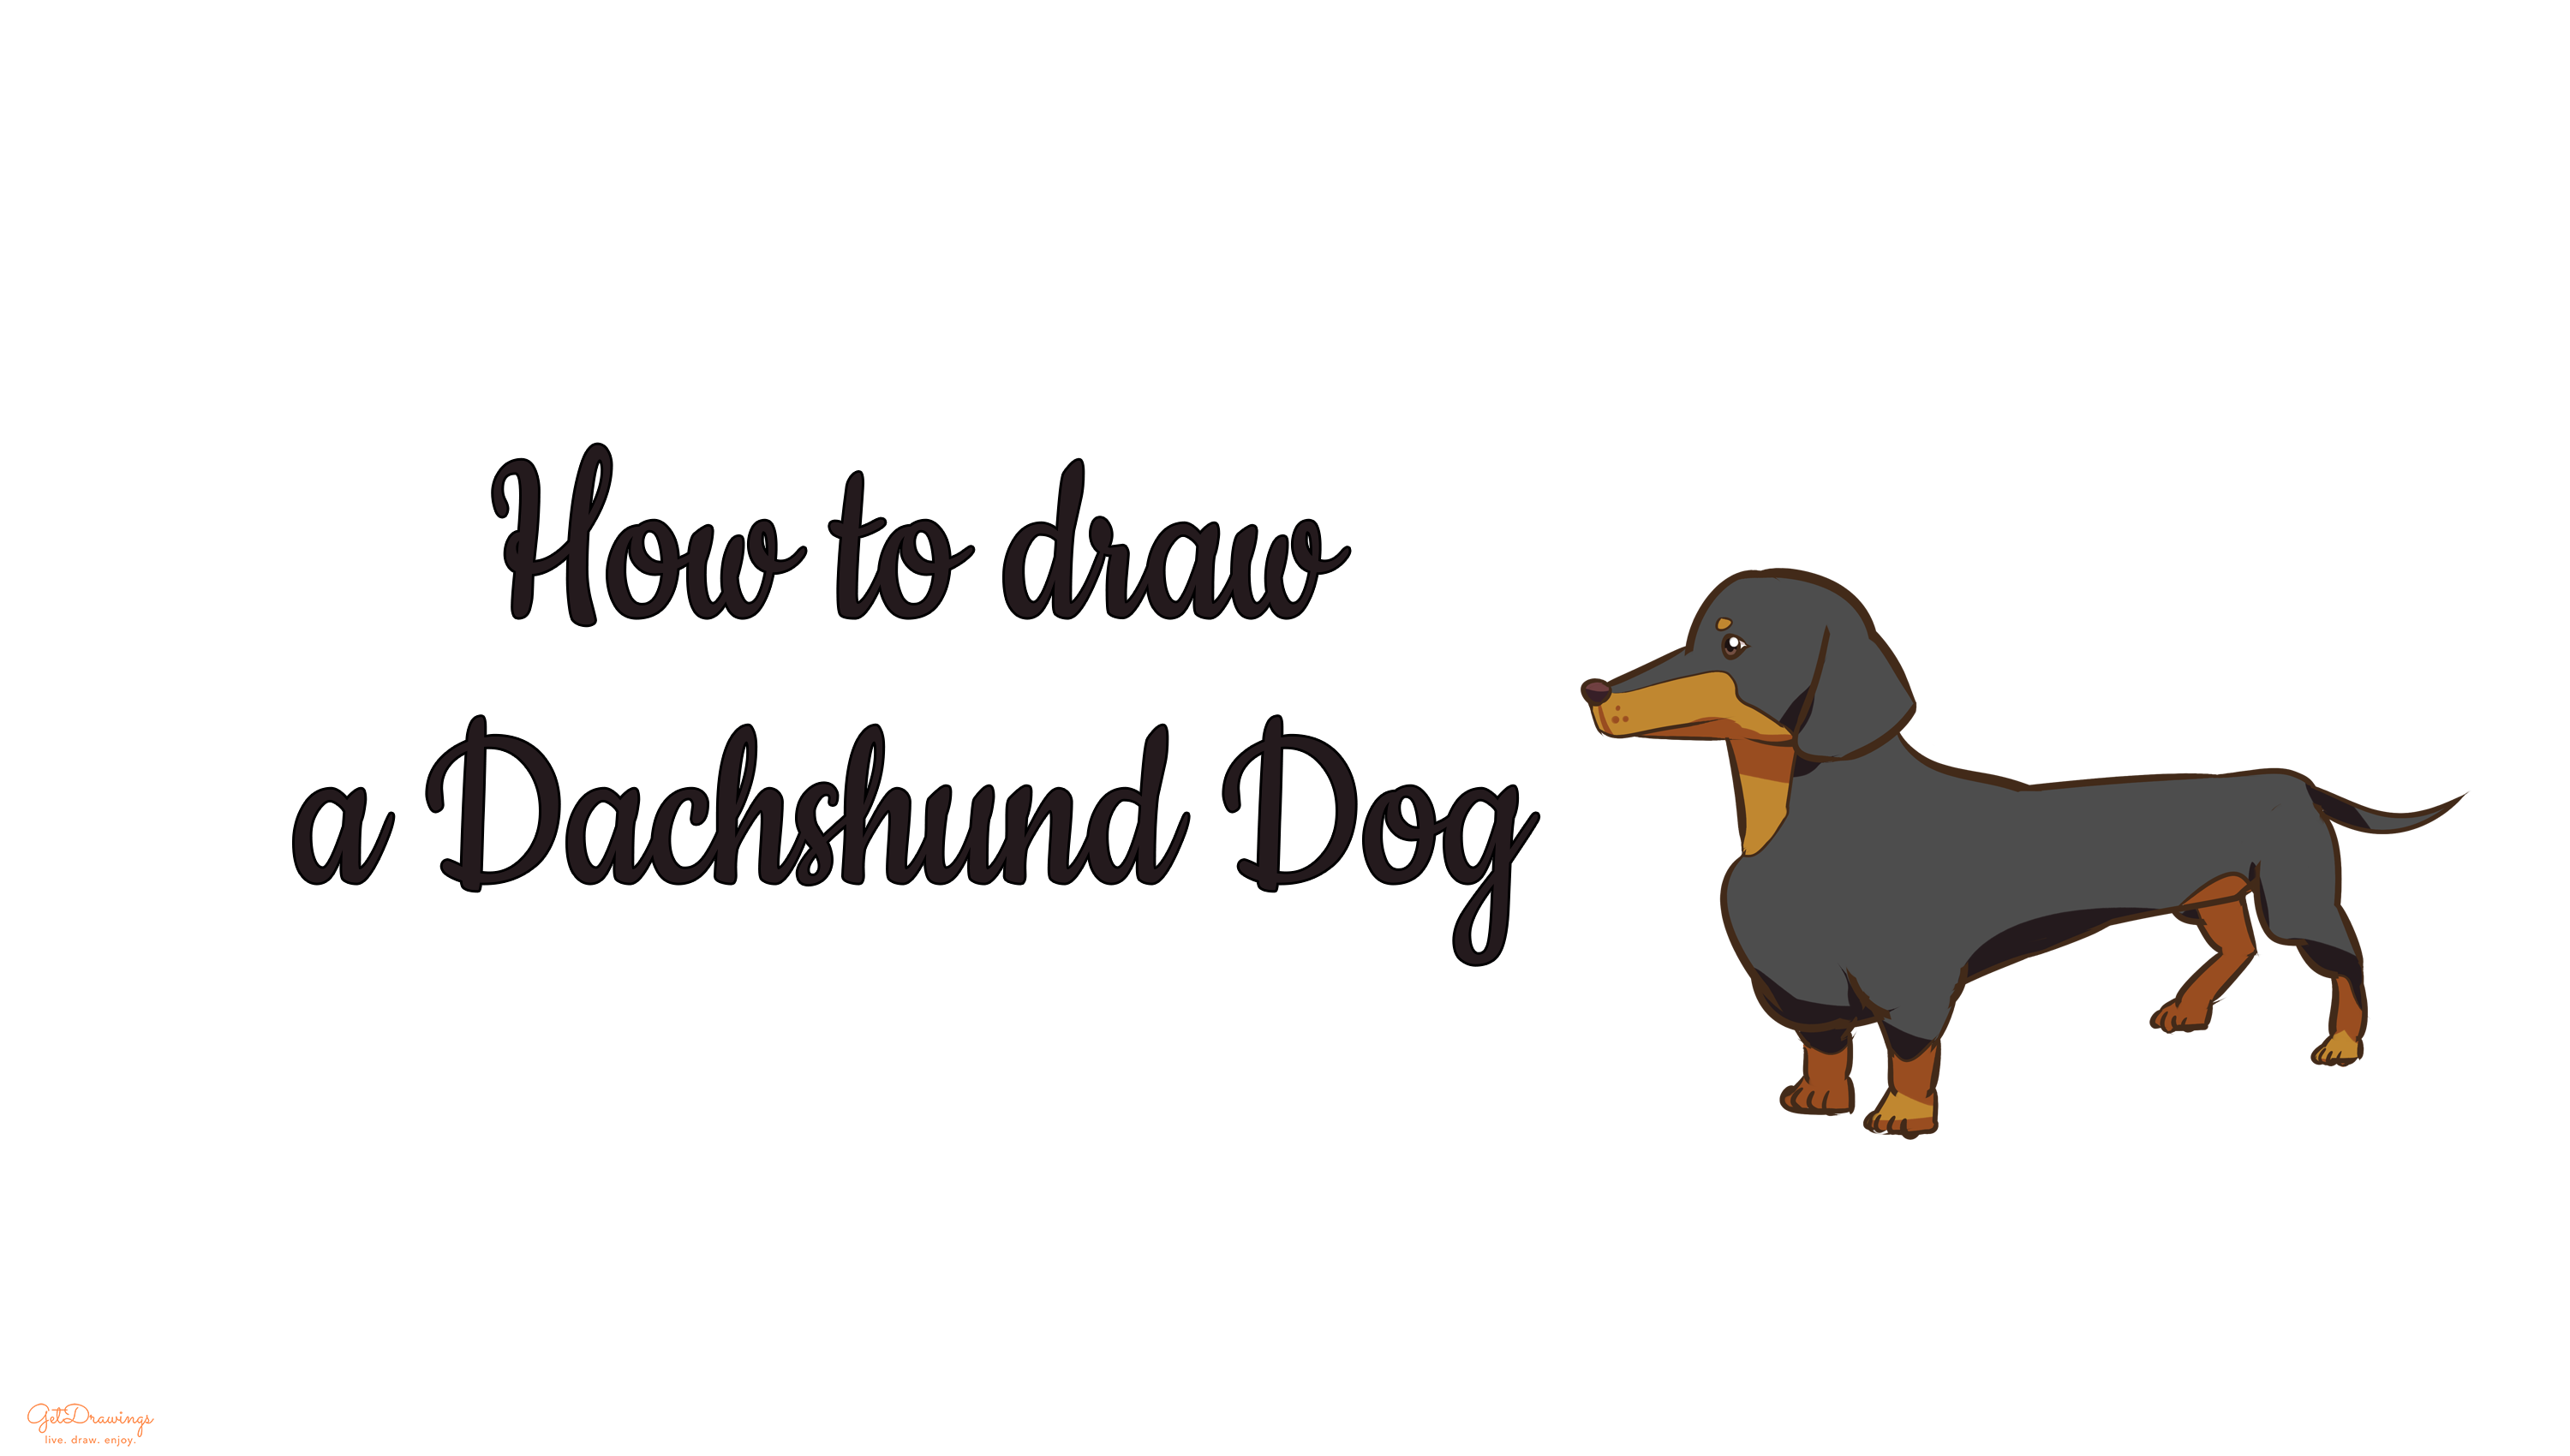 How to draw a Dachshund dog?